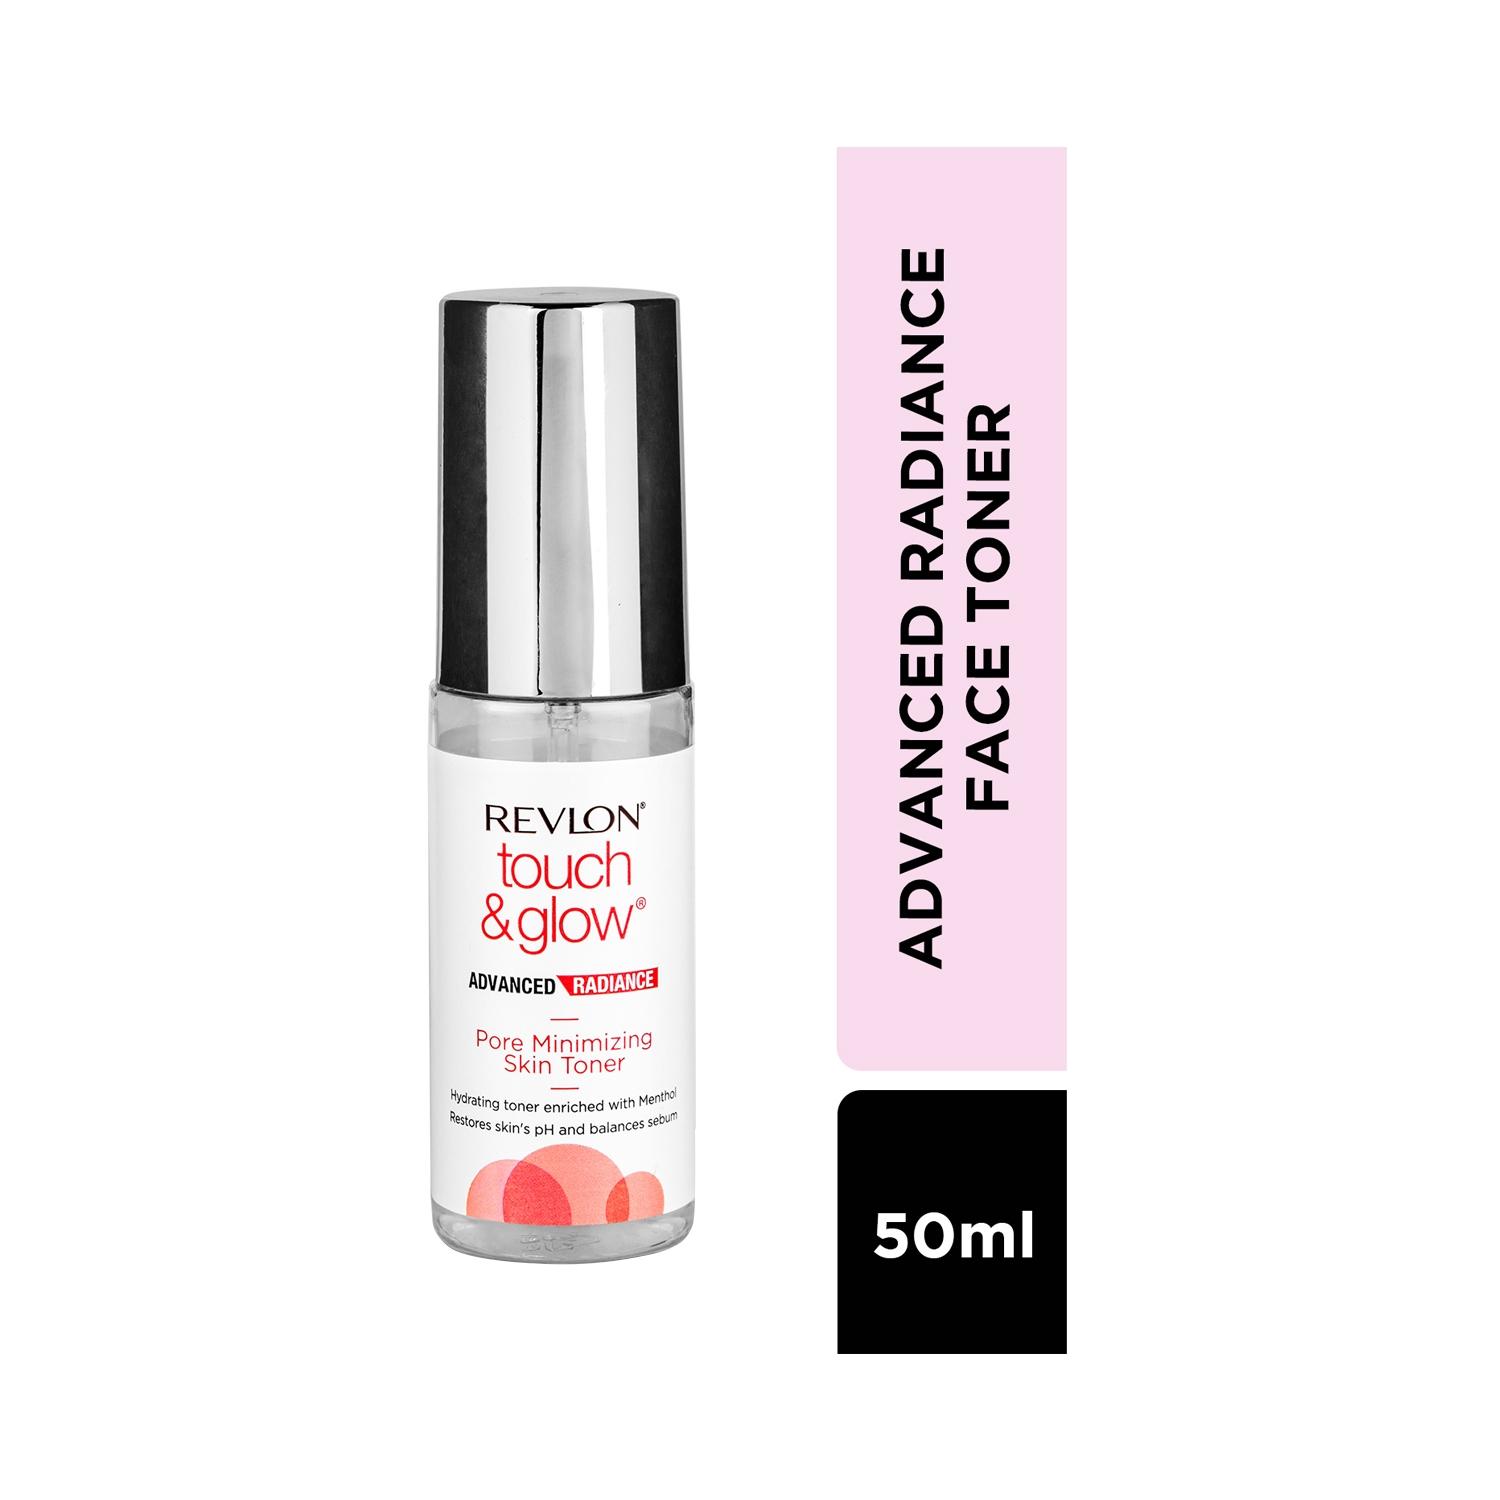 revlon touch & glow advanced radiance pore minimizing skin toner (50g)